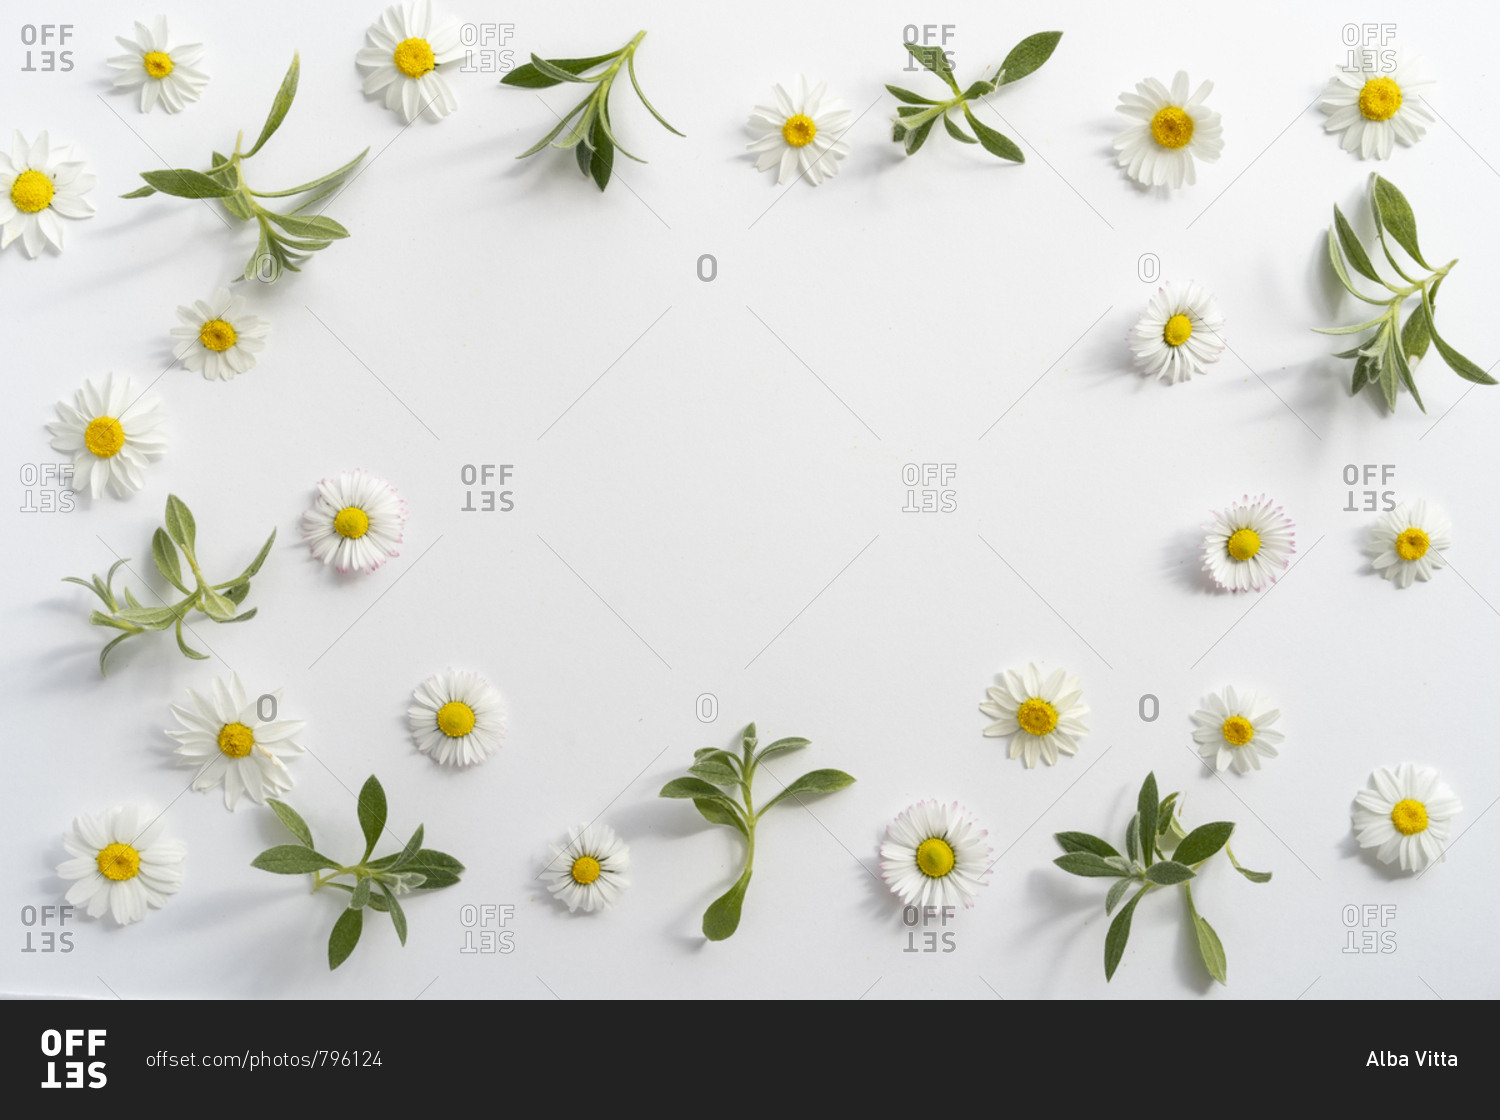 Flat lay arrangement of daisy flowers on plain background